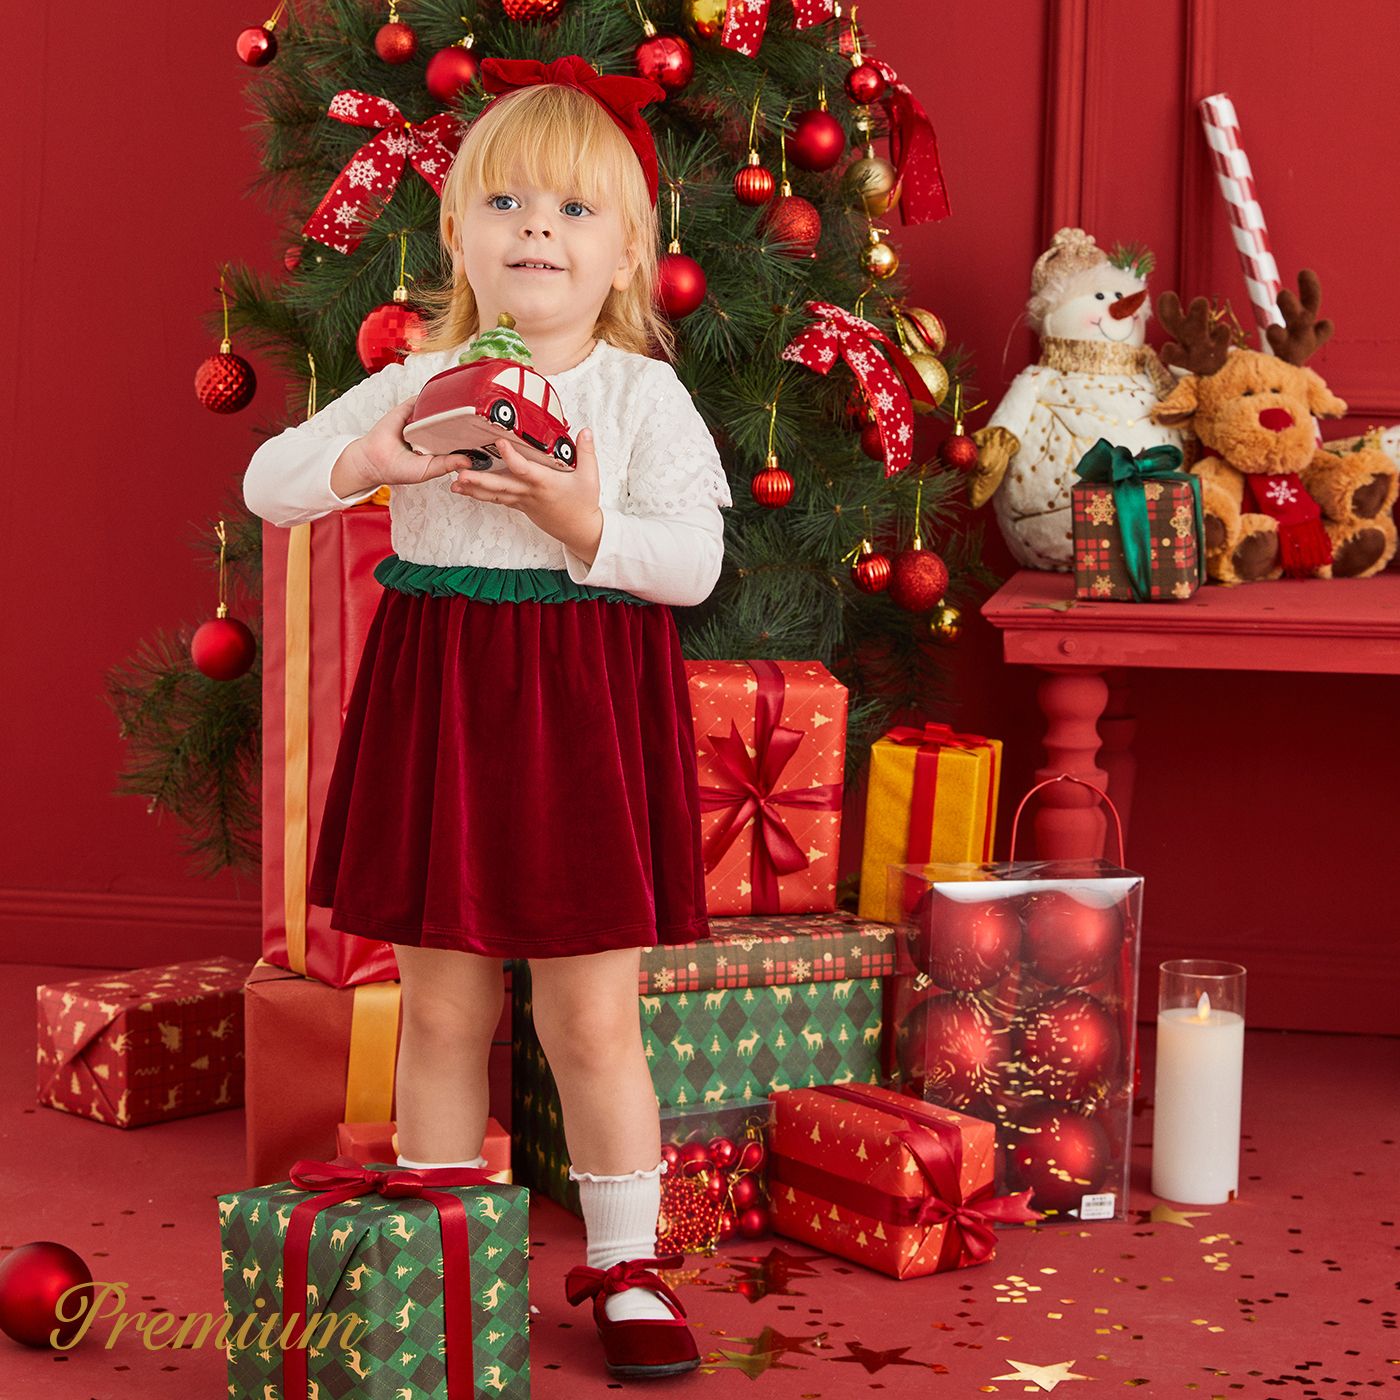 Baby Girl Christmas élégante Robe De Couleur Unie Avec Ruffle Edge